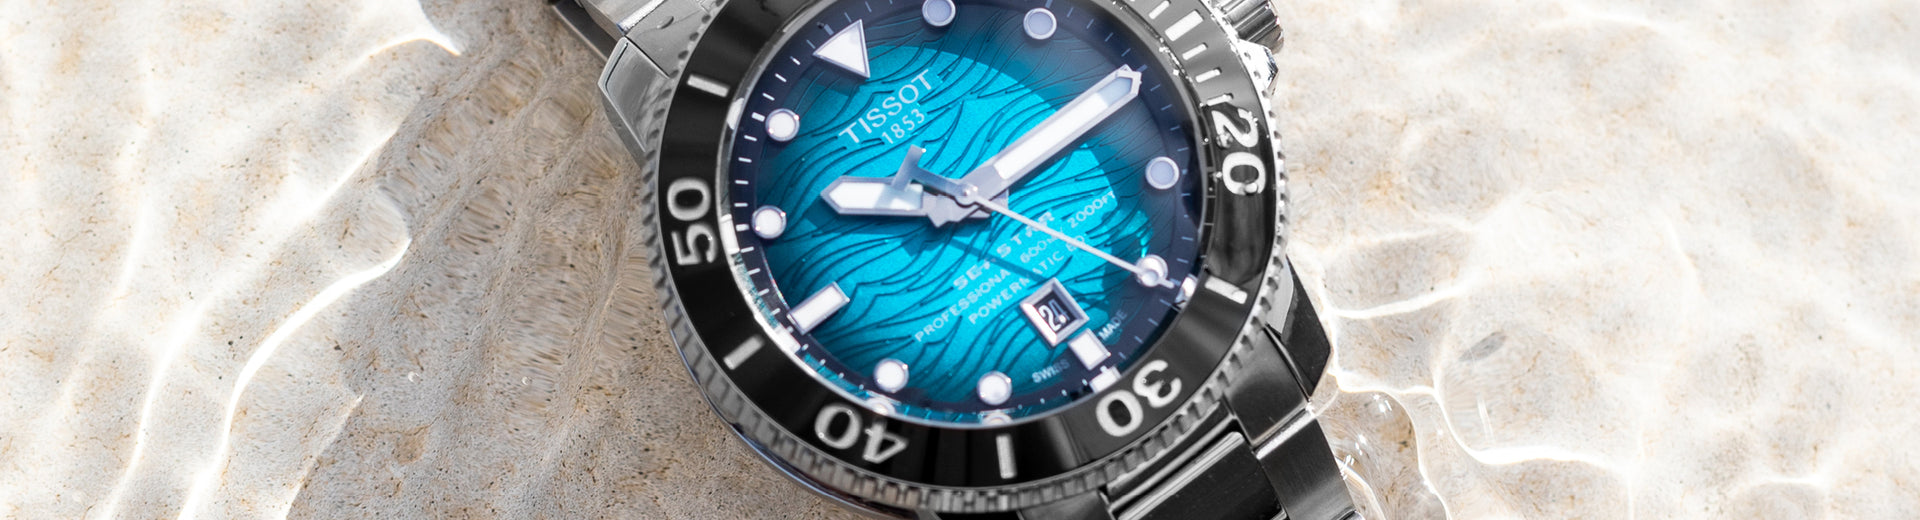 Tissot Seastar 2000 Professional Powermatic 80 Watch T1206071104100